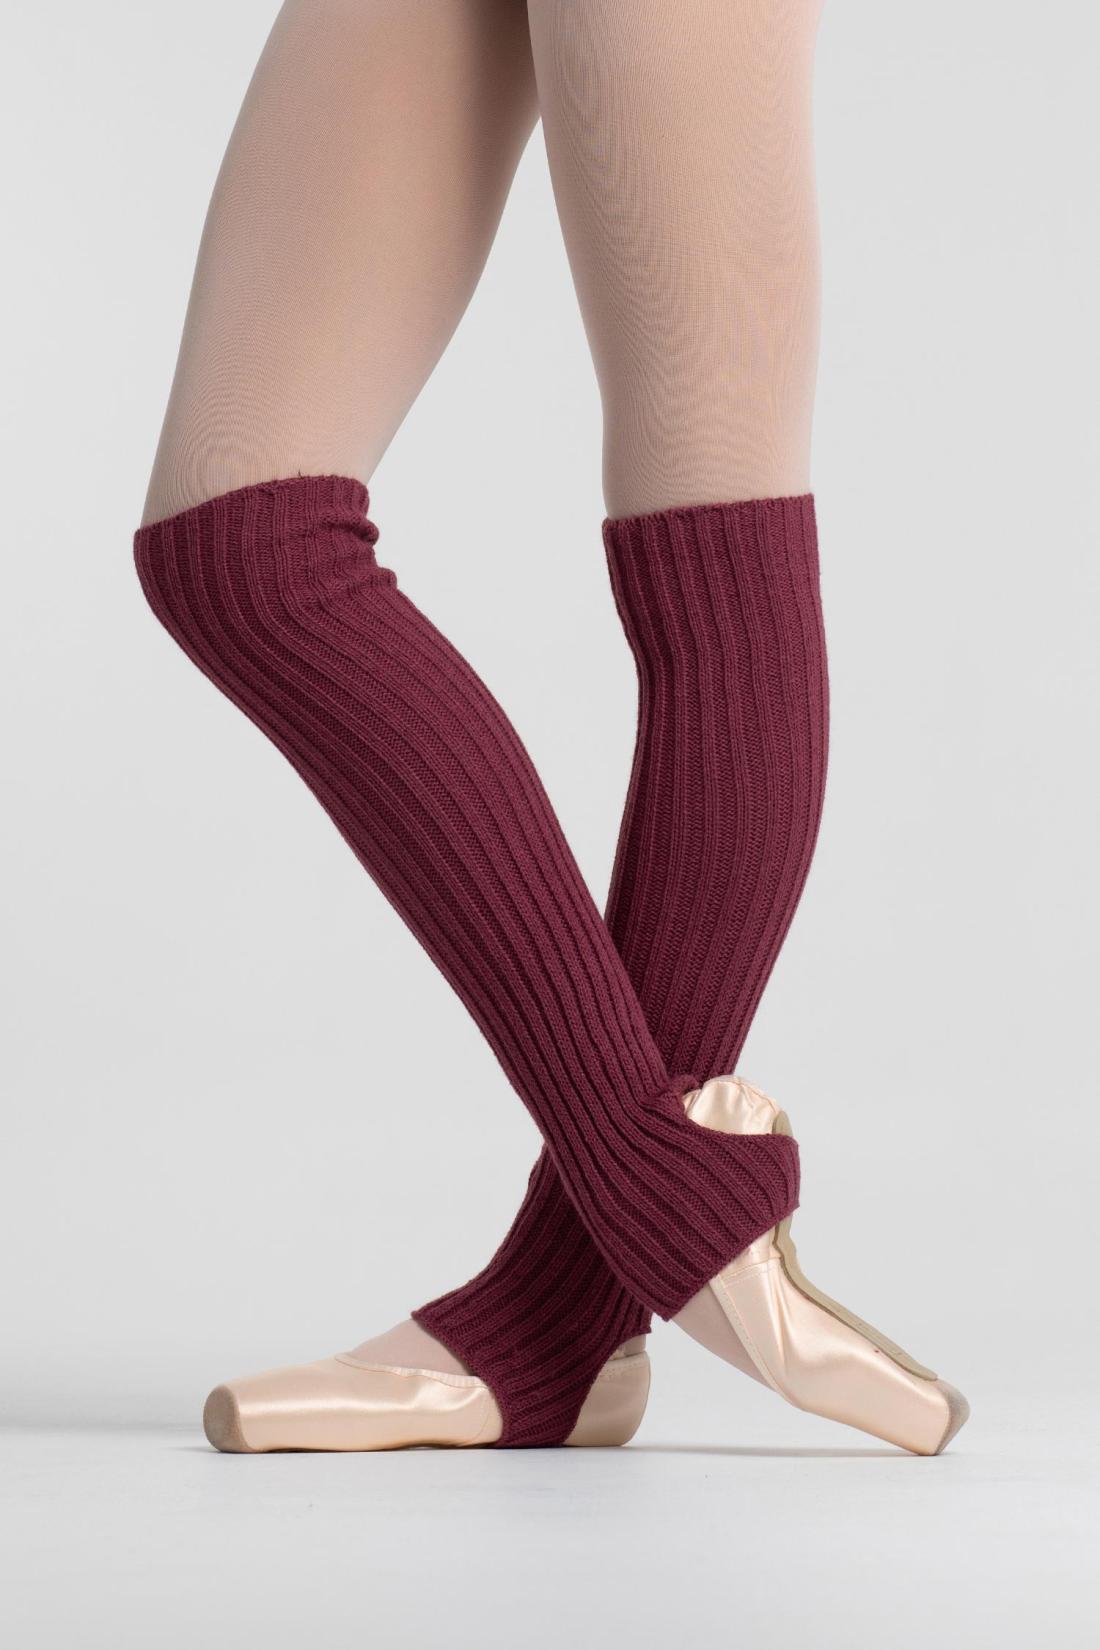 Classic Medcan knit stirrup Legwarmers Intermezzo ballet dancewear